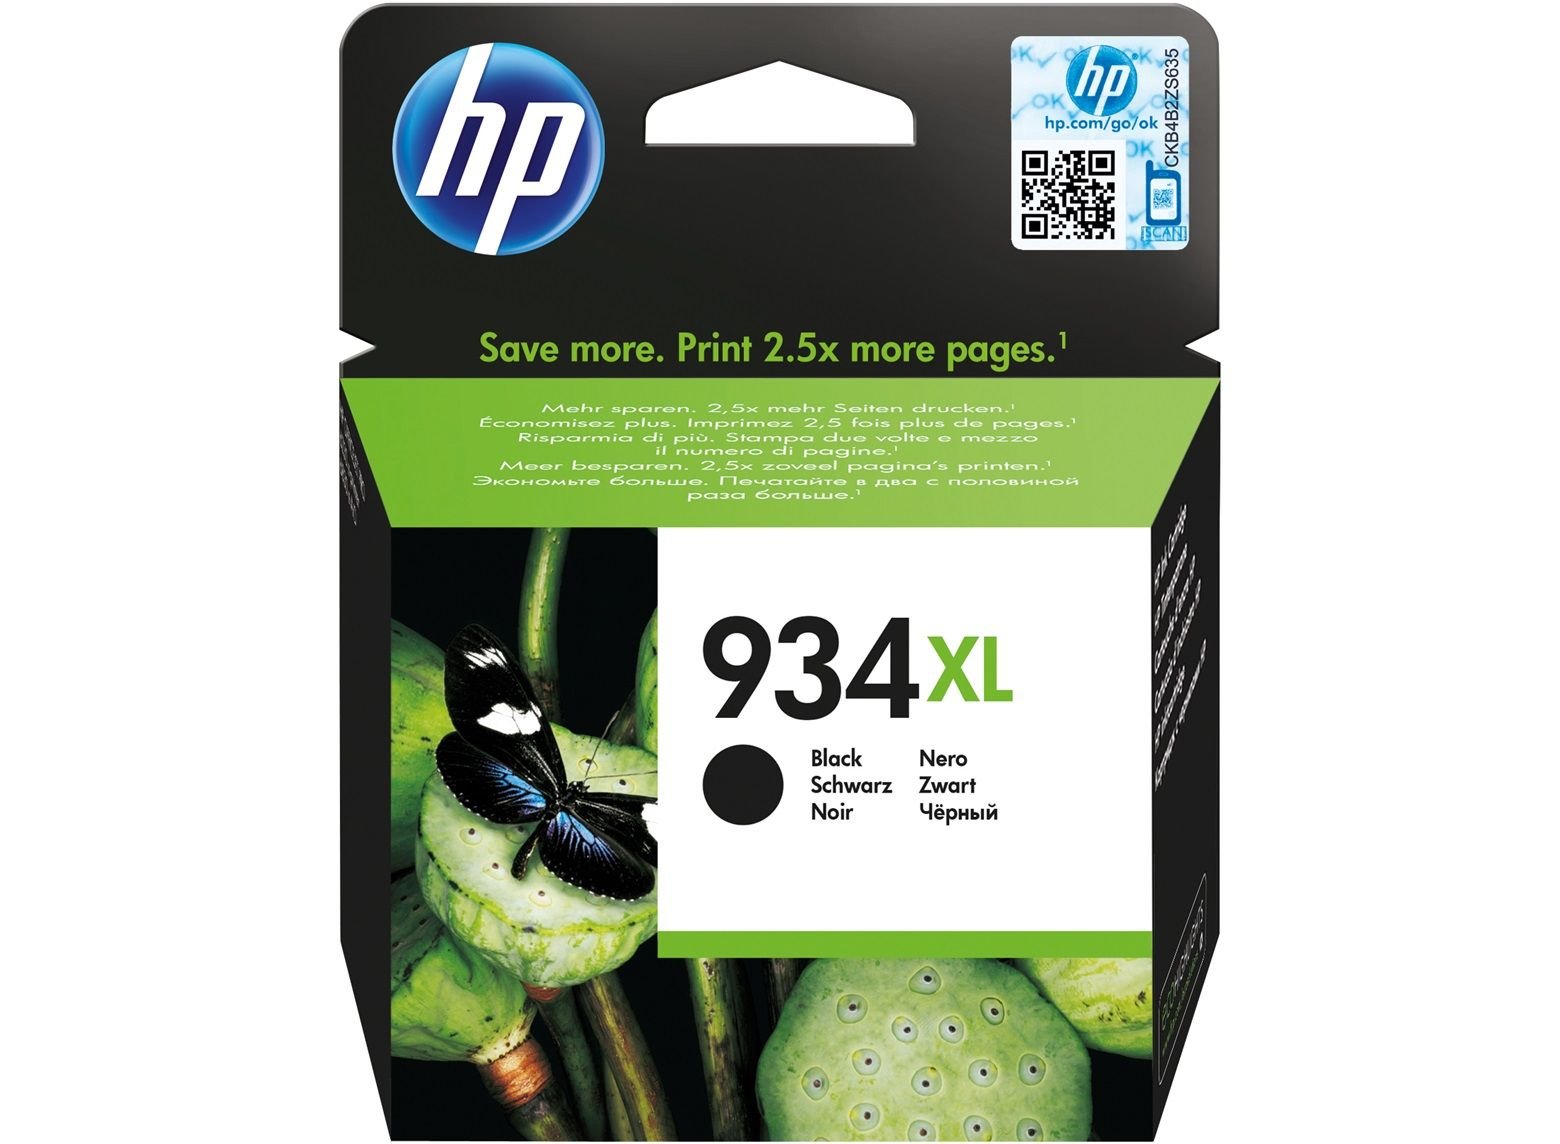 HP C2P23A No 934Xl Yüksek Kapasiteli Siyah Kartuş